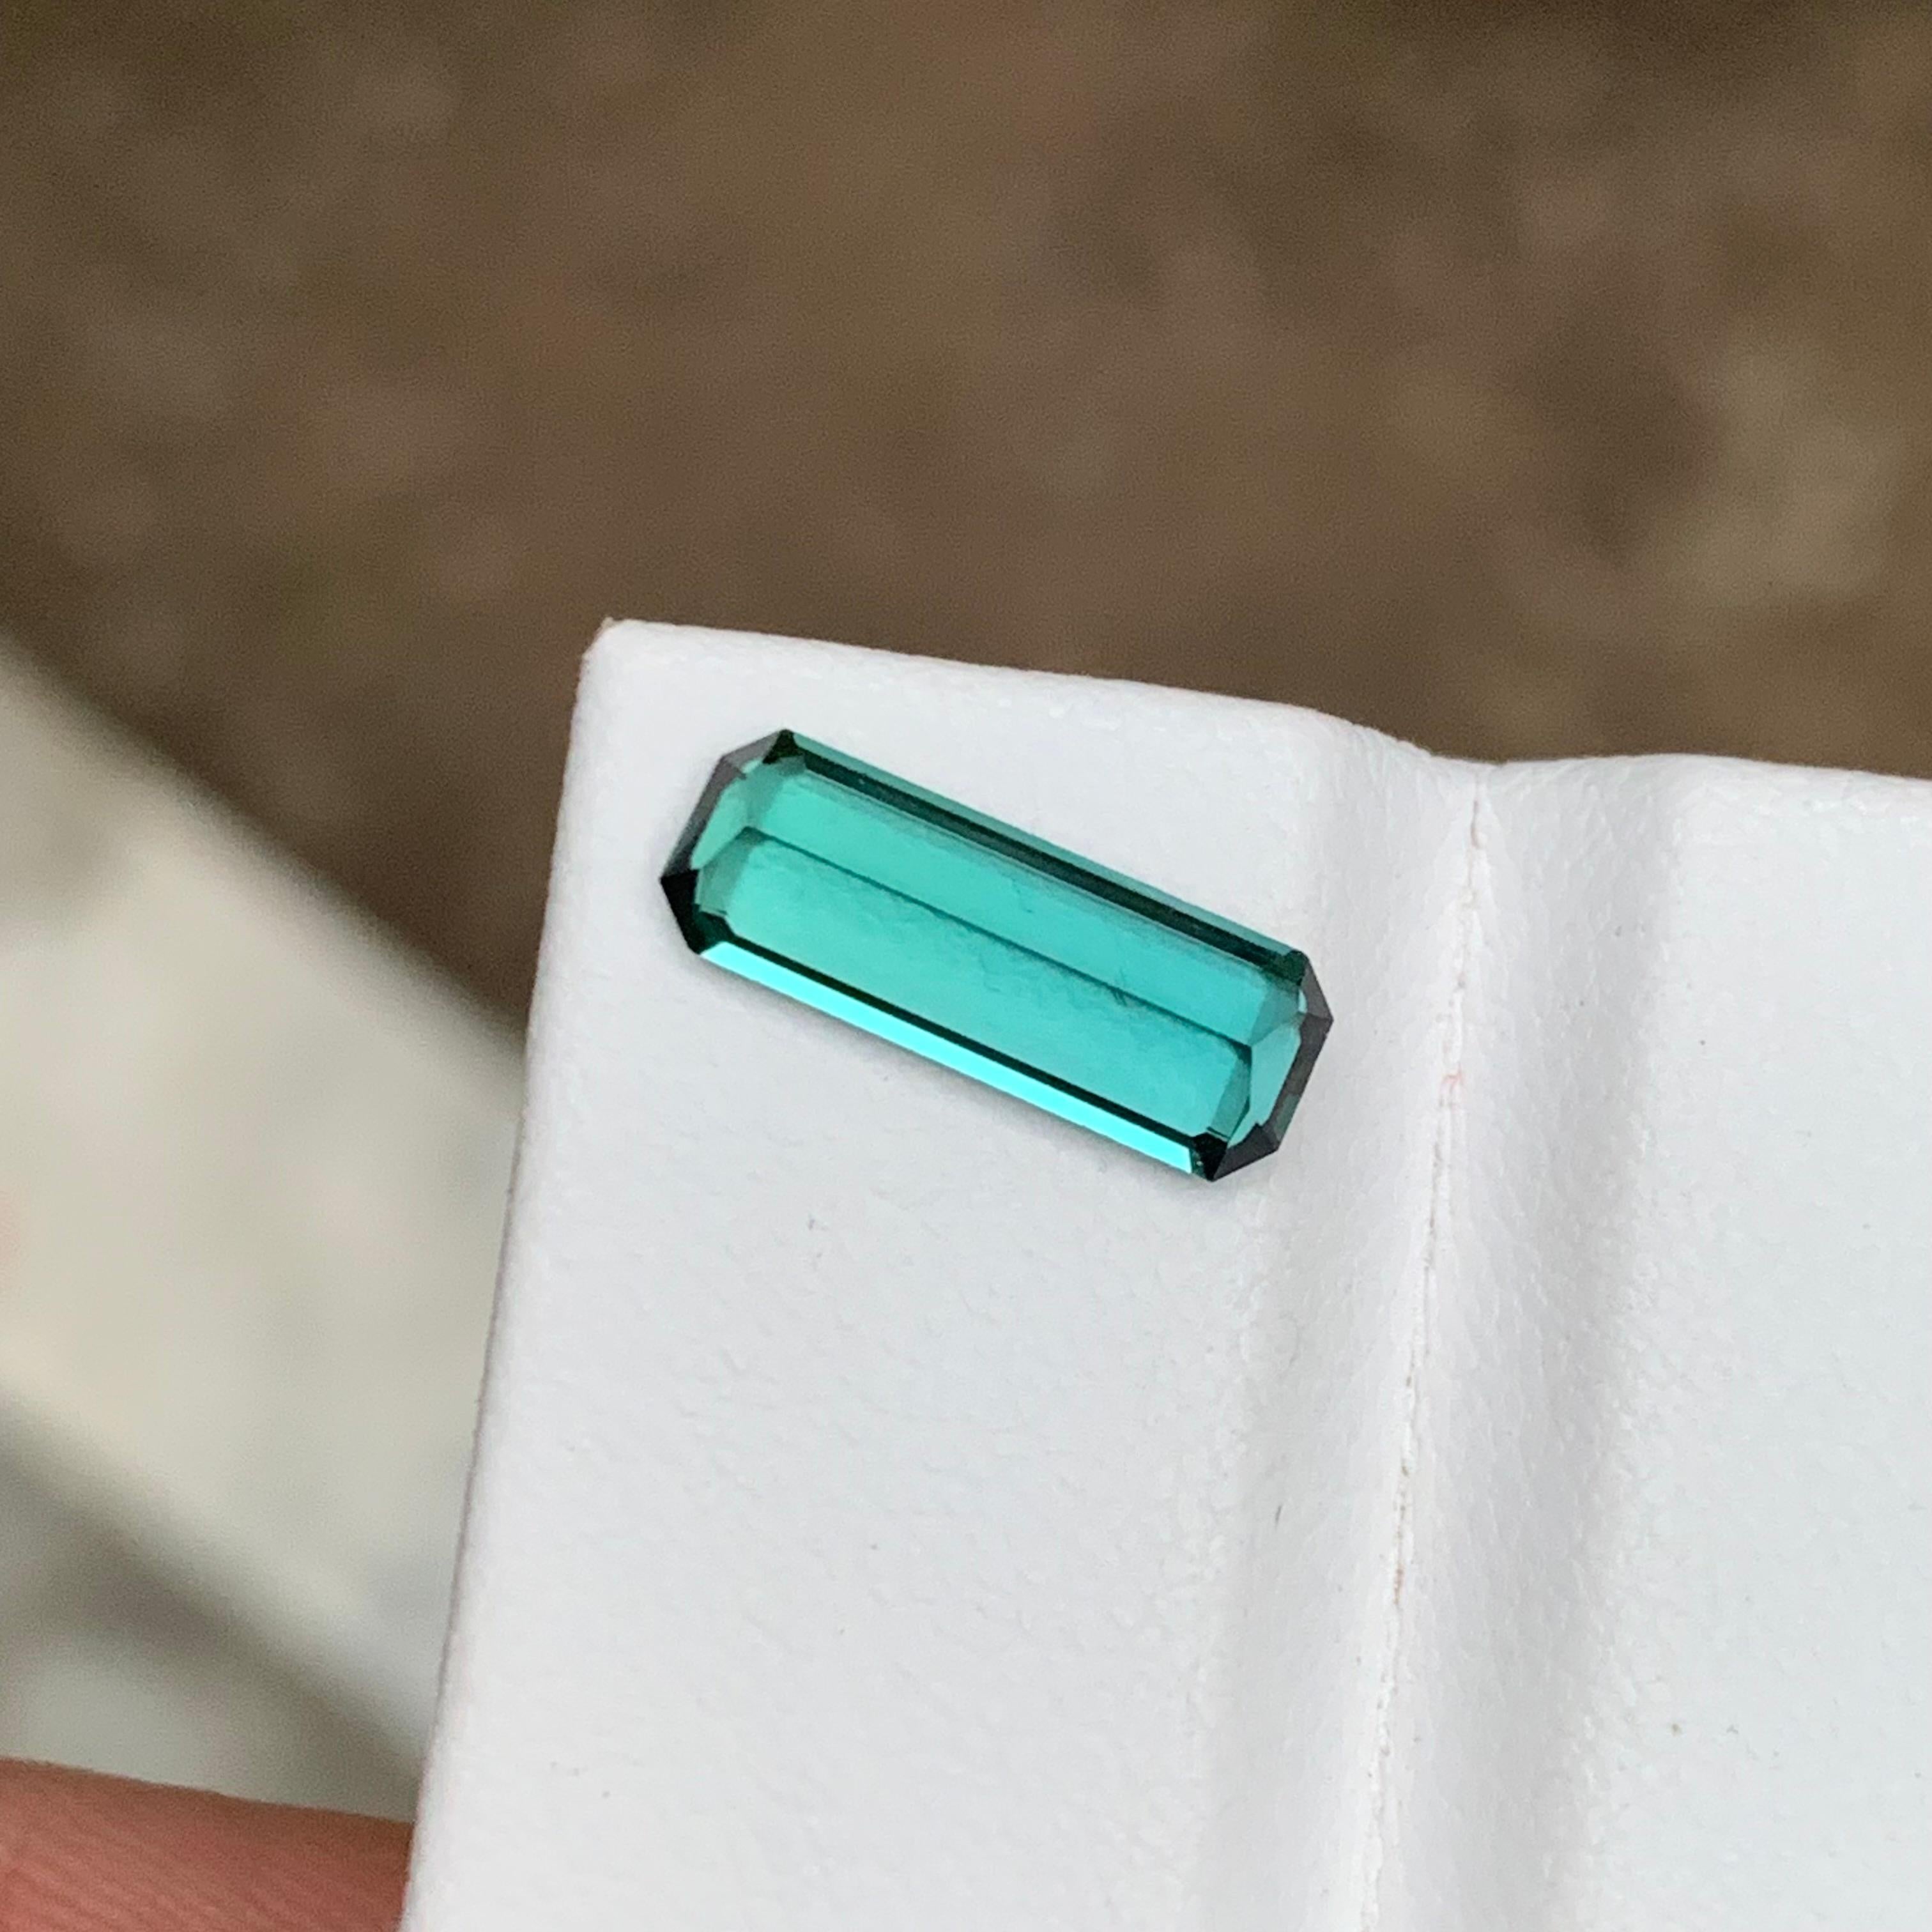 Rare Vivid Neon Bluish Green Hue Tourmaline Gemstone 1.75Ct Emerald Cut for Ring For Sale 3